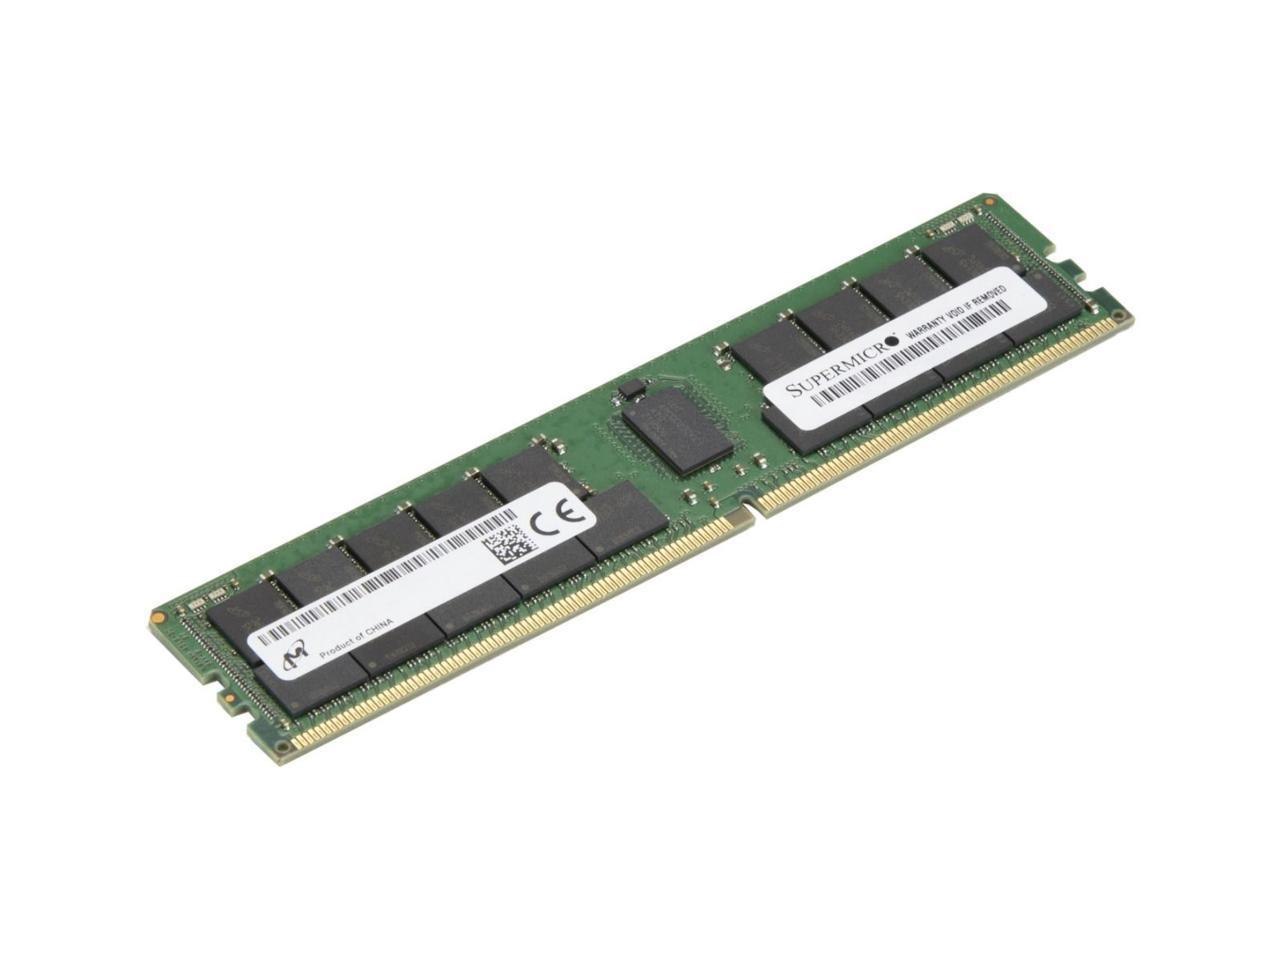 SuperMicro 32GB Ecc Registered DDR4 3200 (PC4 25600) Server Memory Model Mem-Dr432l-Hl04-Er32